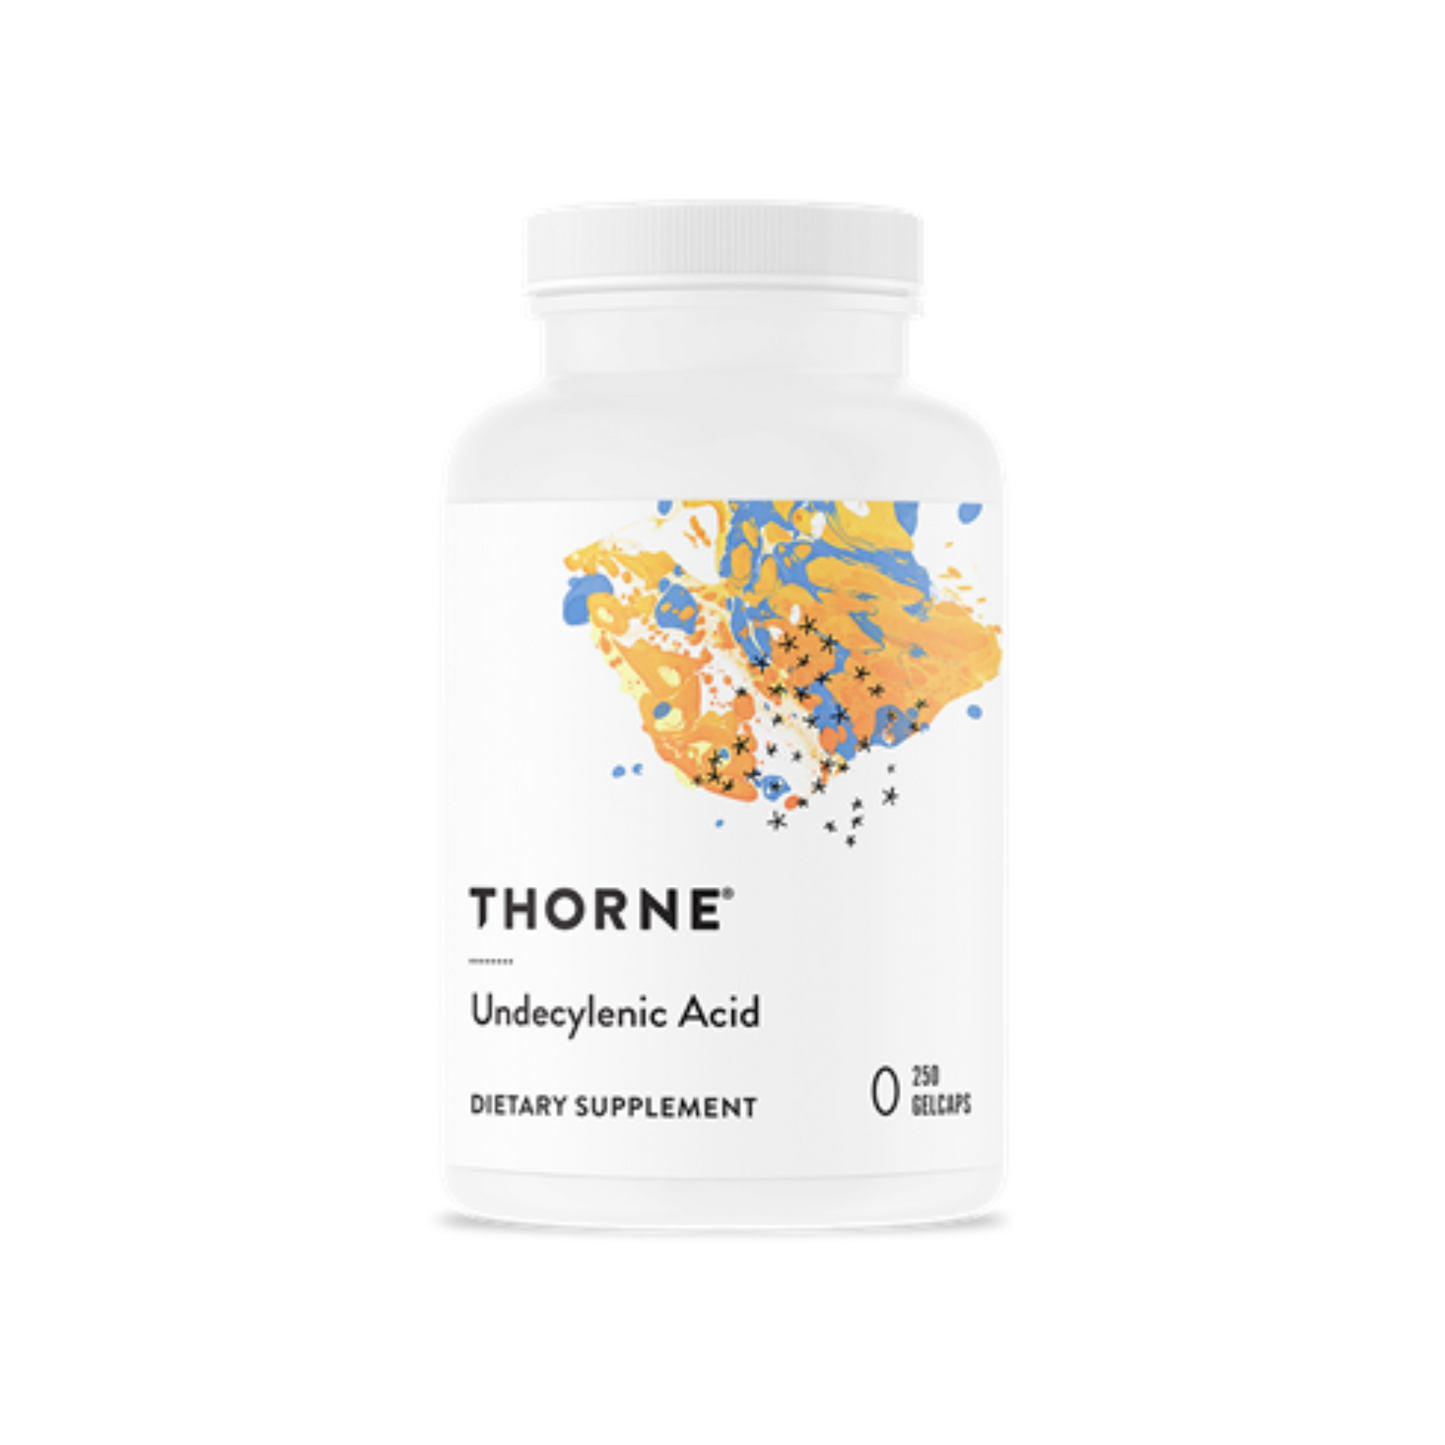 Thorne - Undecylenic Acid